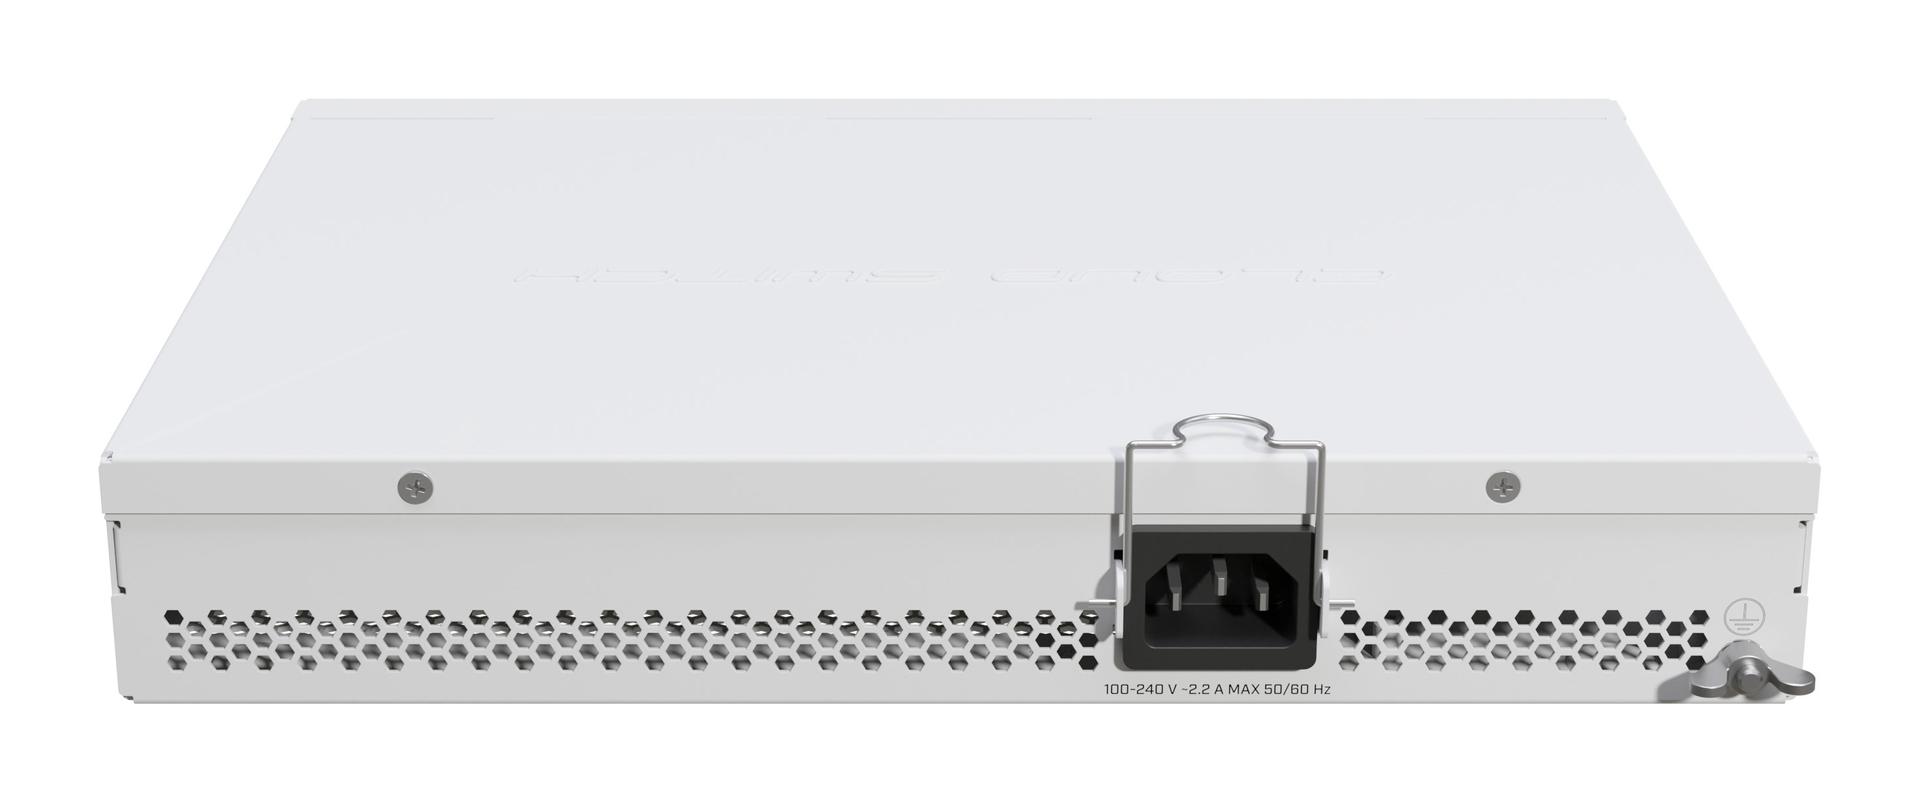 MikroTik CSS610-8P-2S+IN Gigabit PoE SFP+ 8 Port Switch Back Image